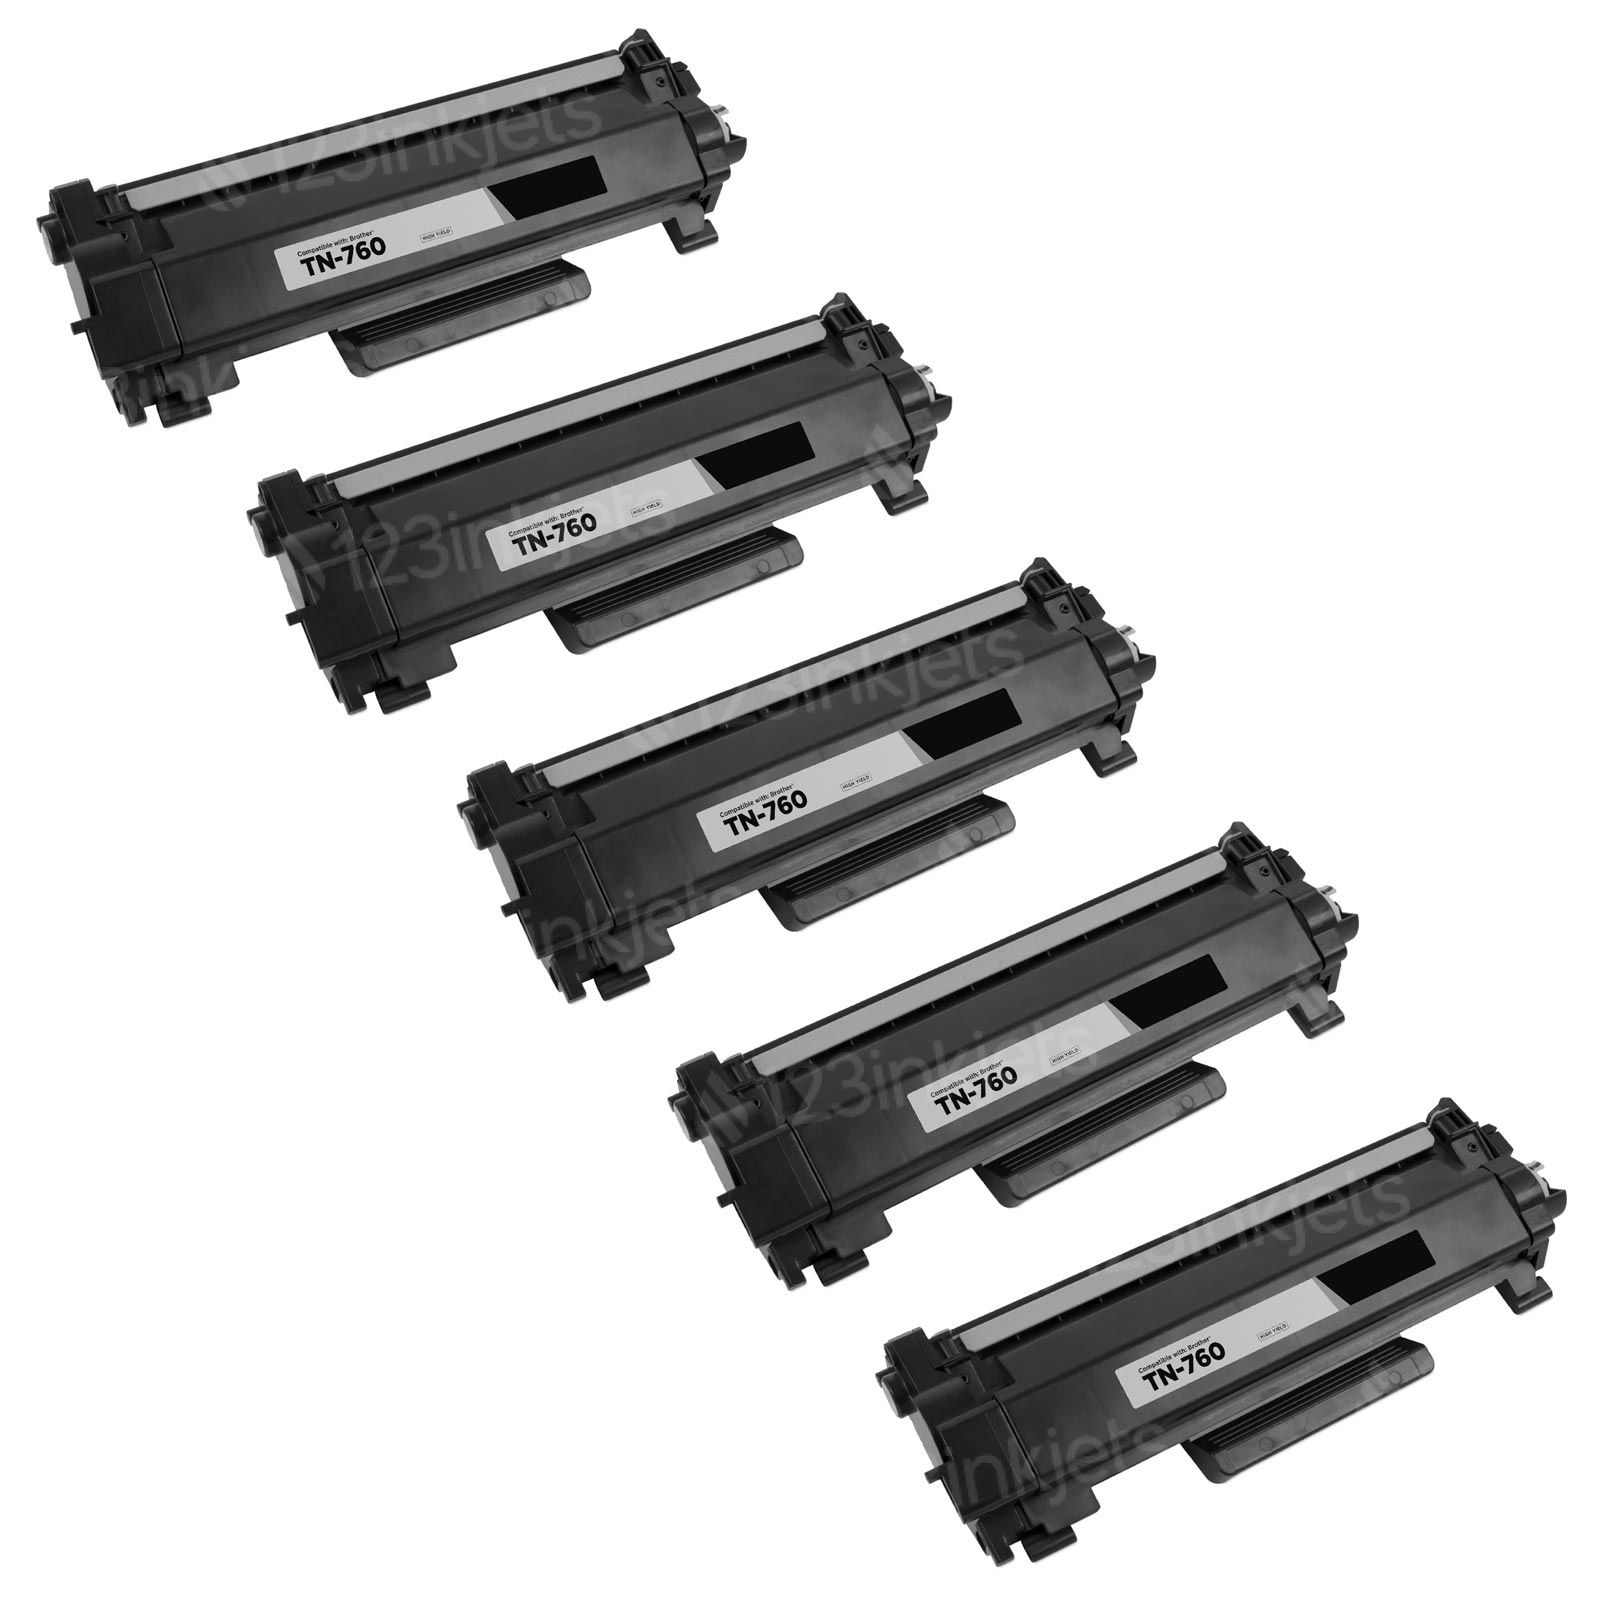 5-Pack Brother TN760 Black Toner Cartridge High Yield - 123inkjets